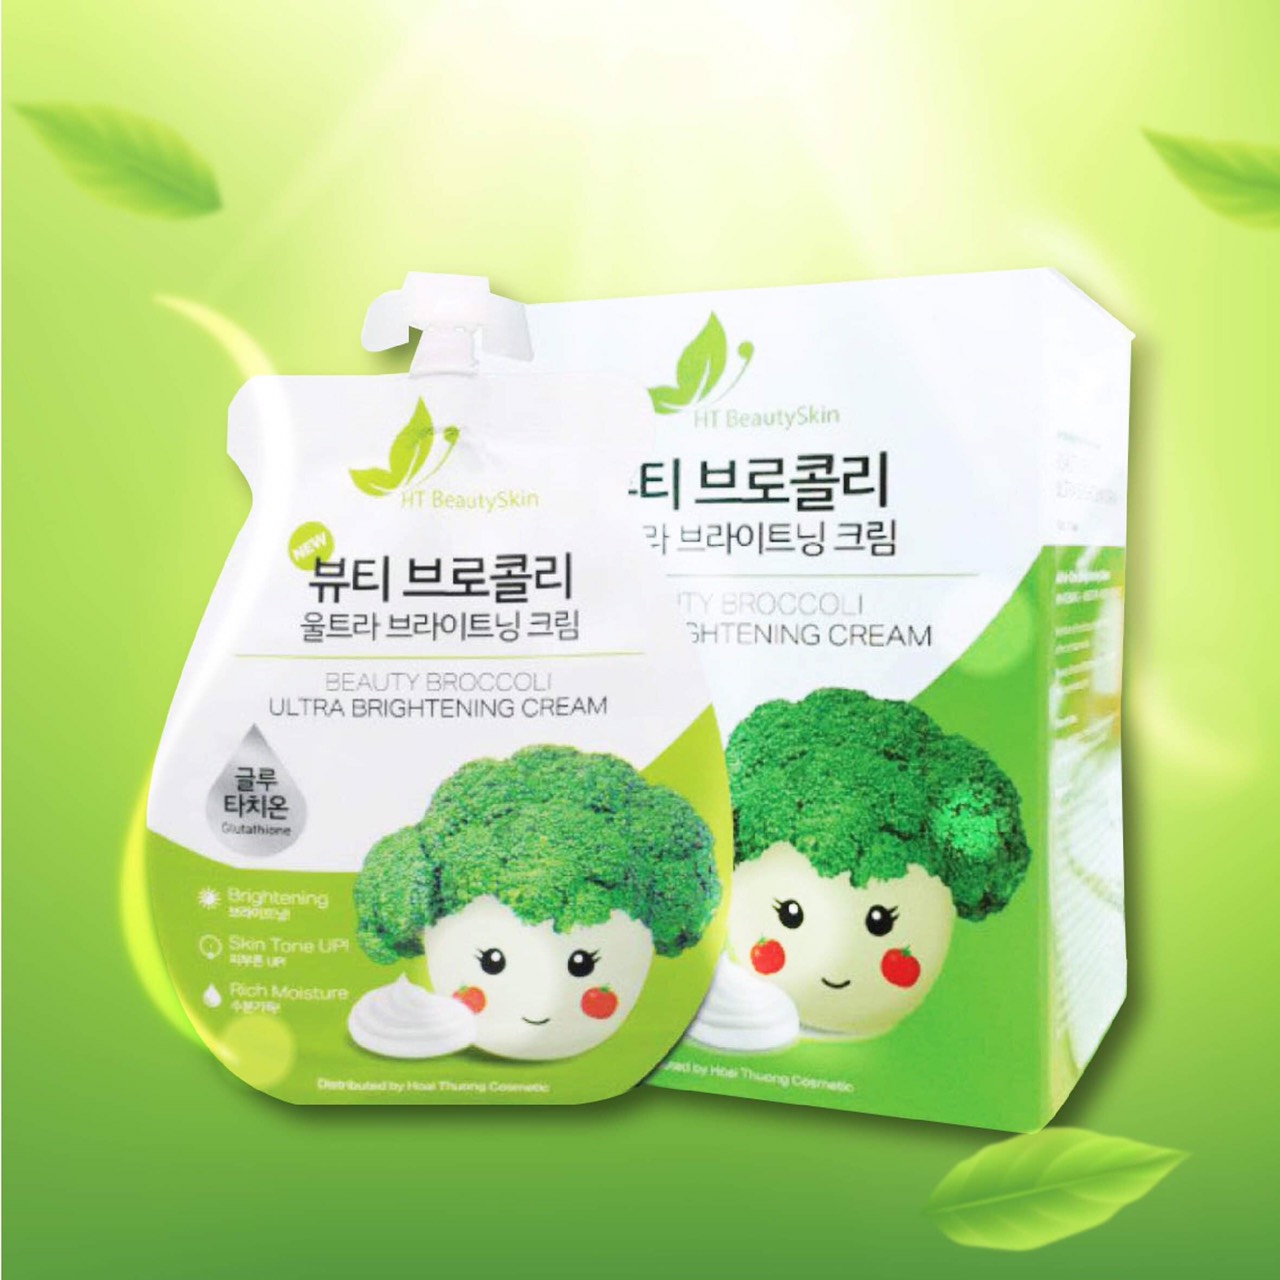 KEM FACE SÚP LƠ - Beauty Broccoli Ultra Brightening Cream (3 túi)